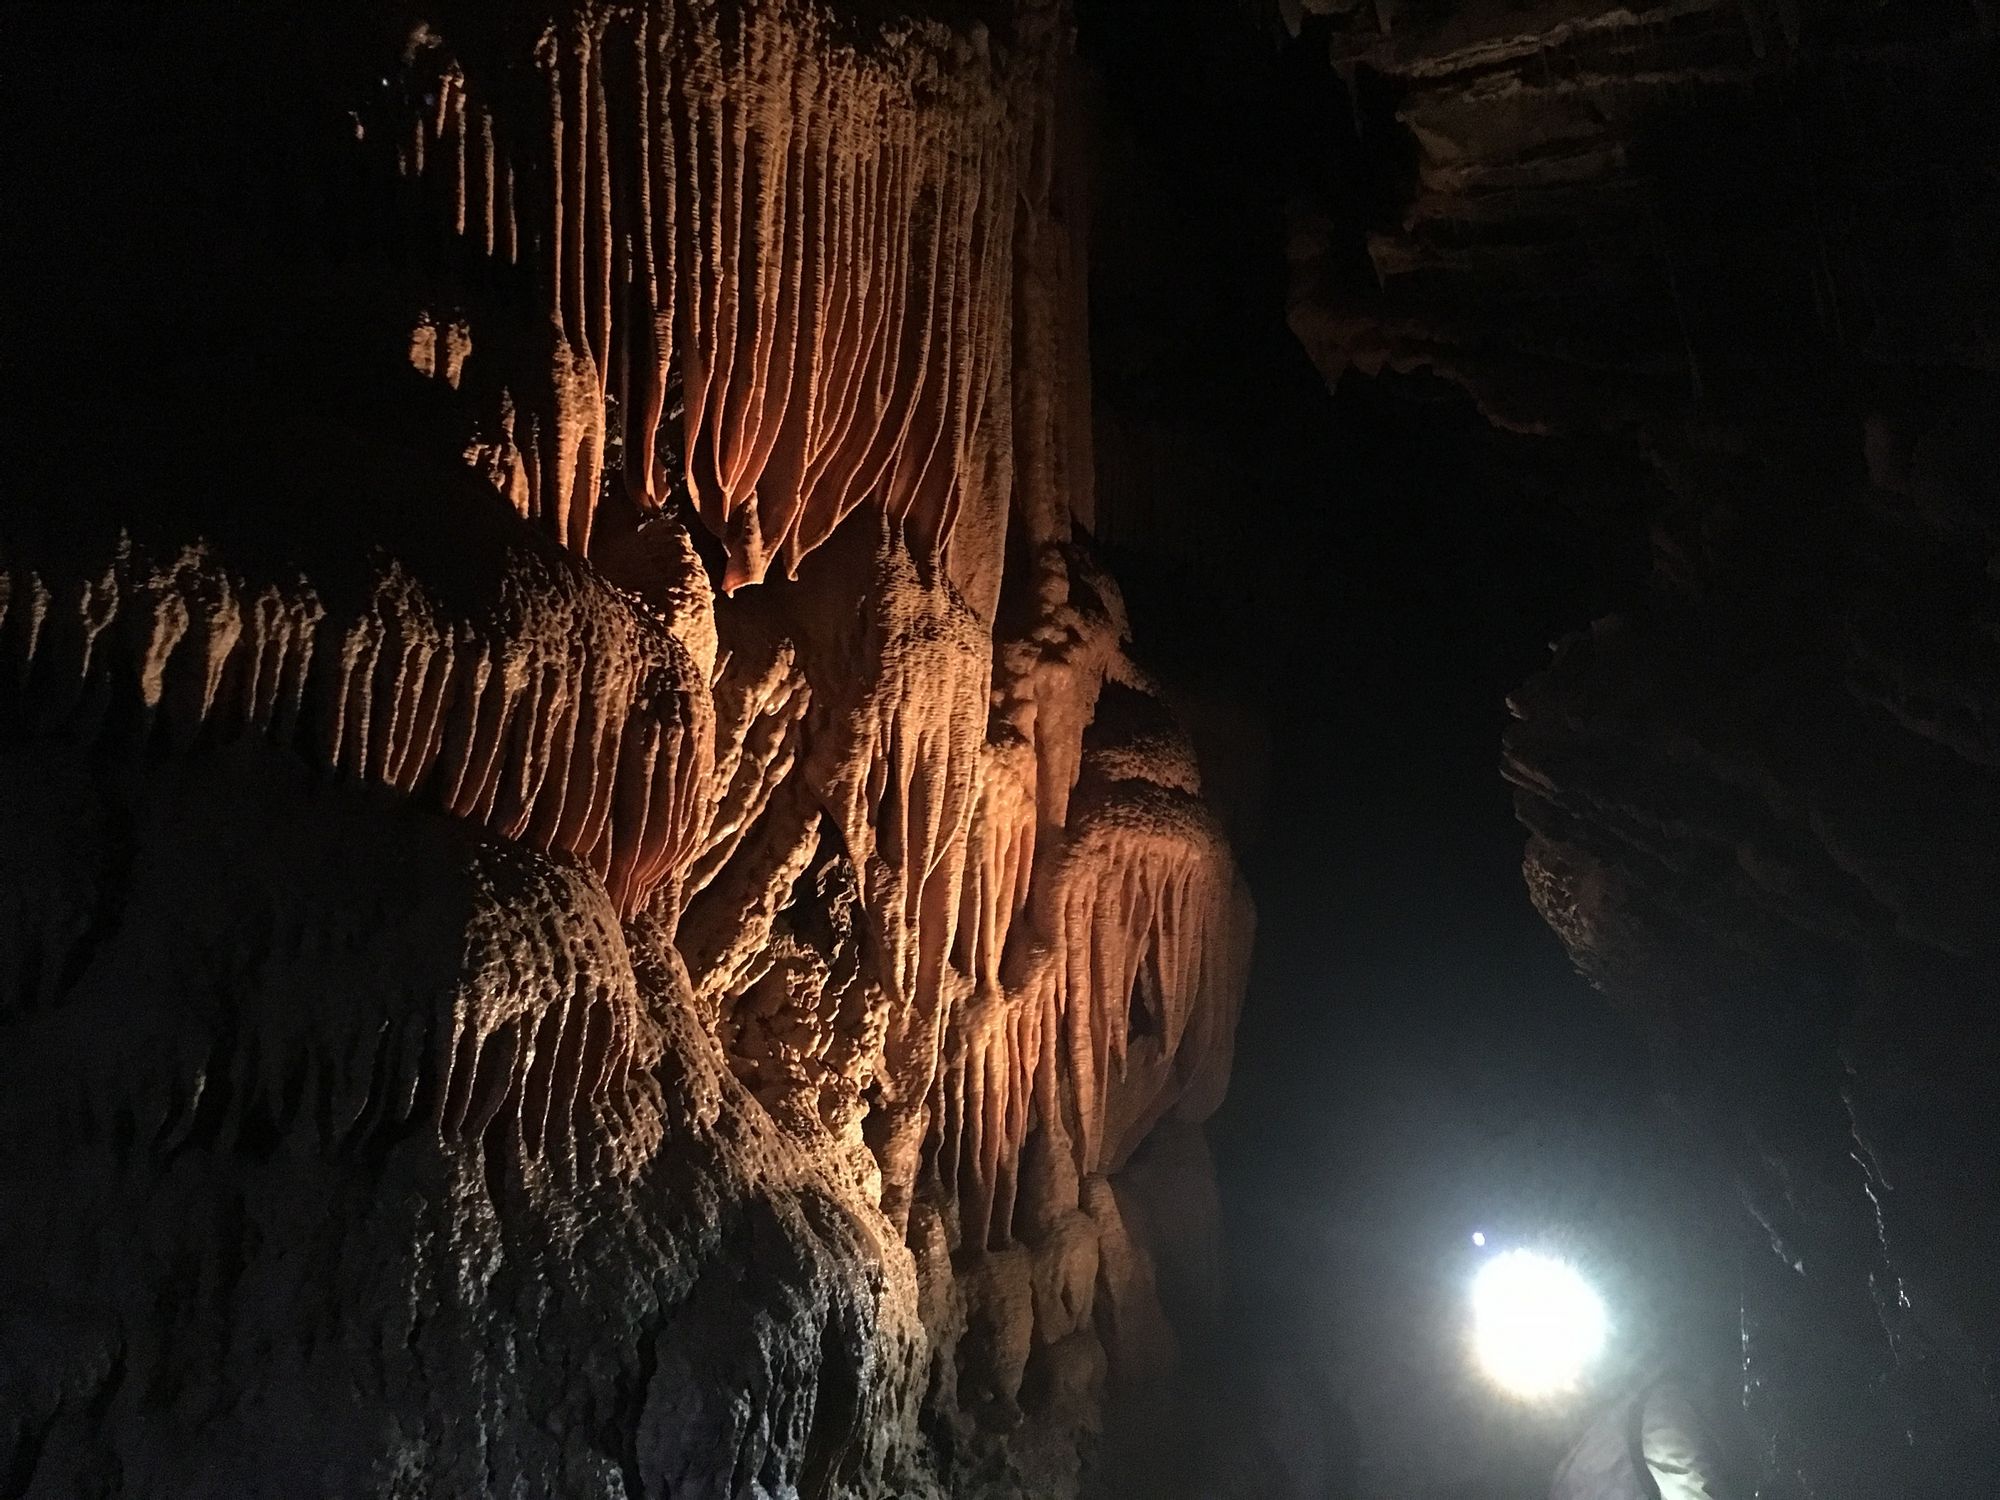 Mole-Creek-cave-Tasmania